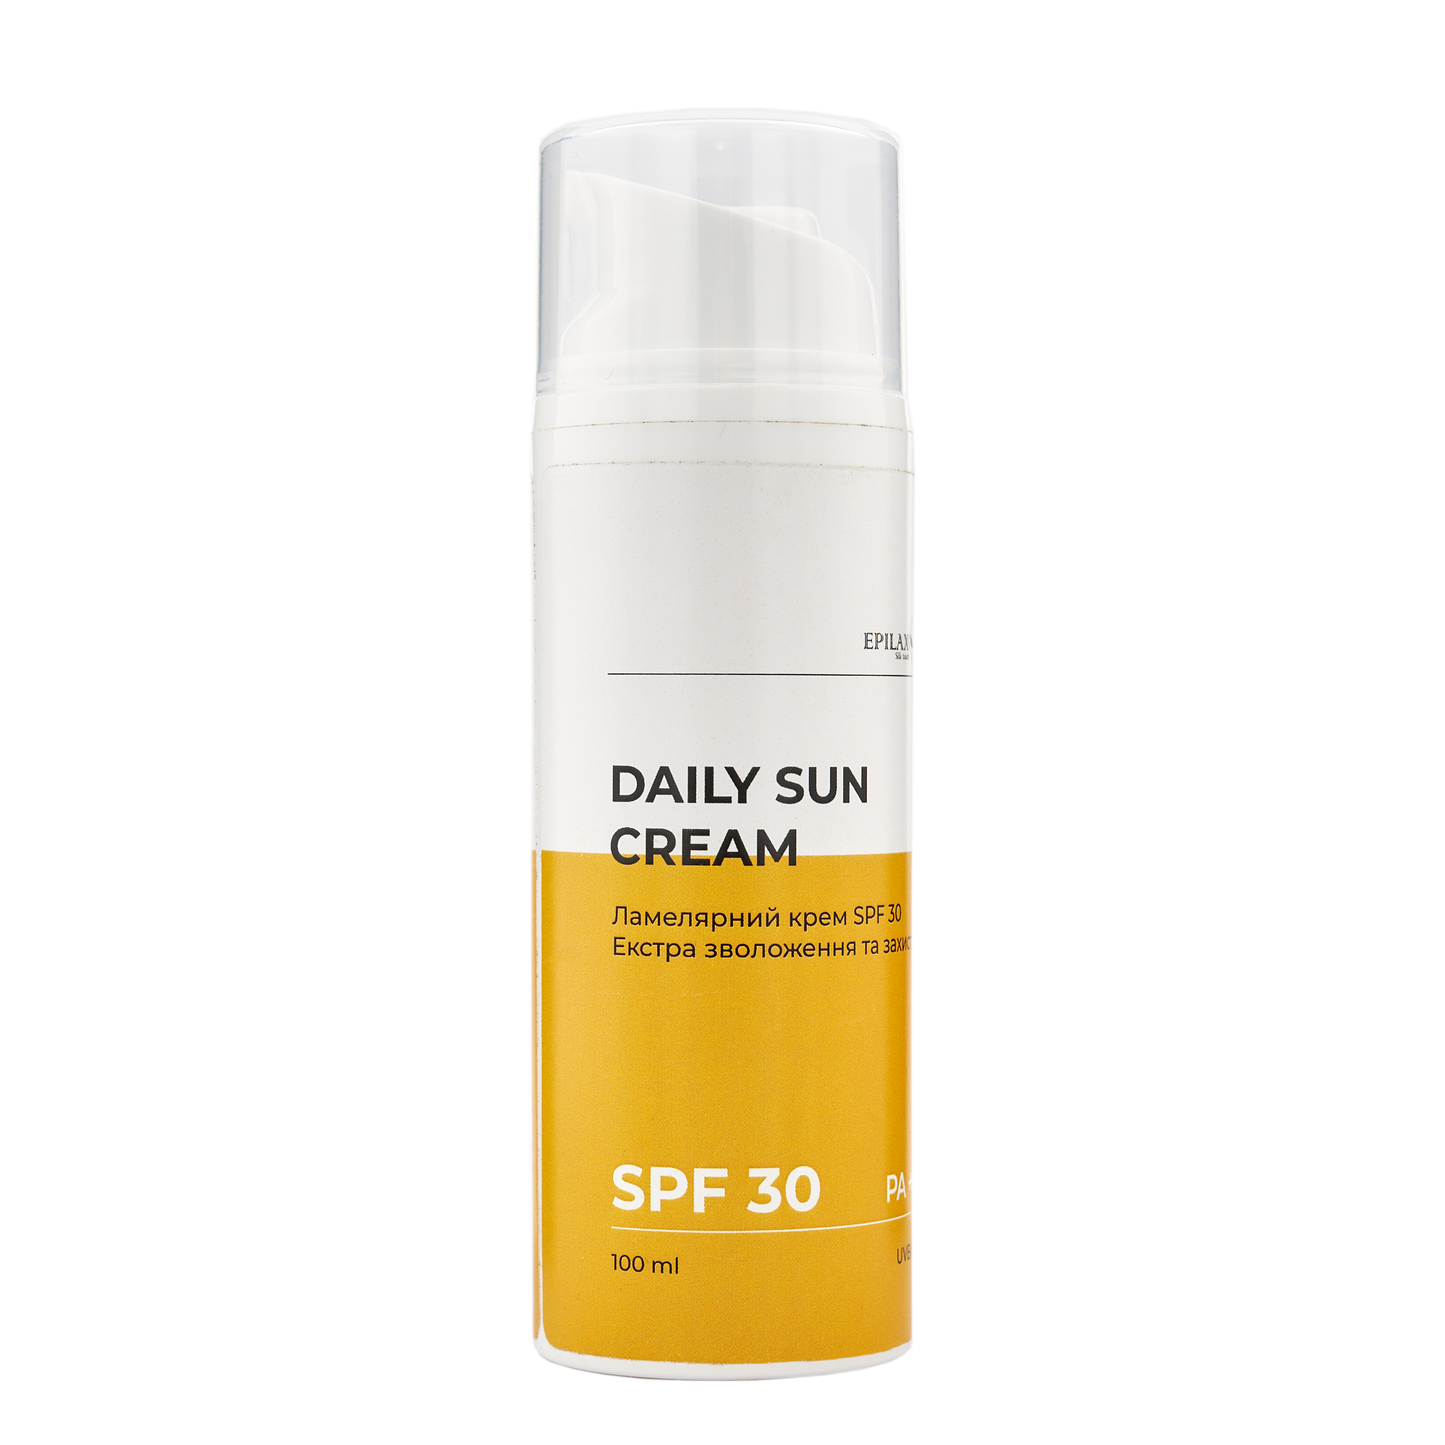 Lamellar cream SPF 30 extra moisturizing and protective 100 ml EPILAX